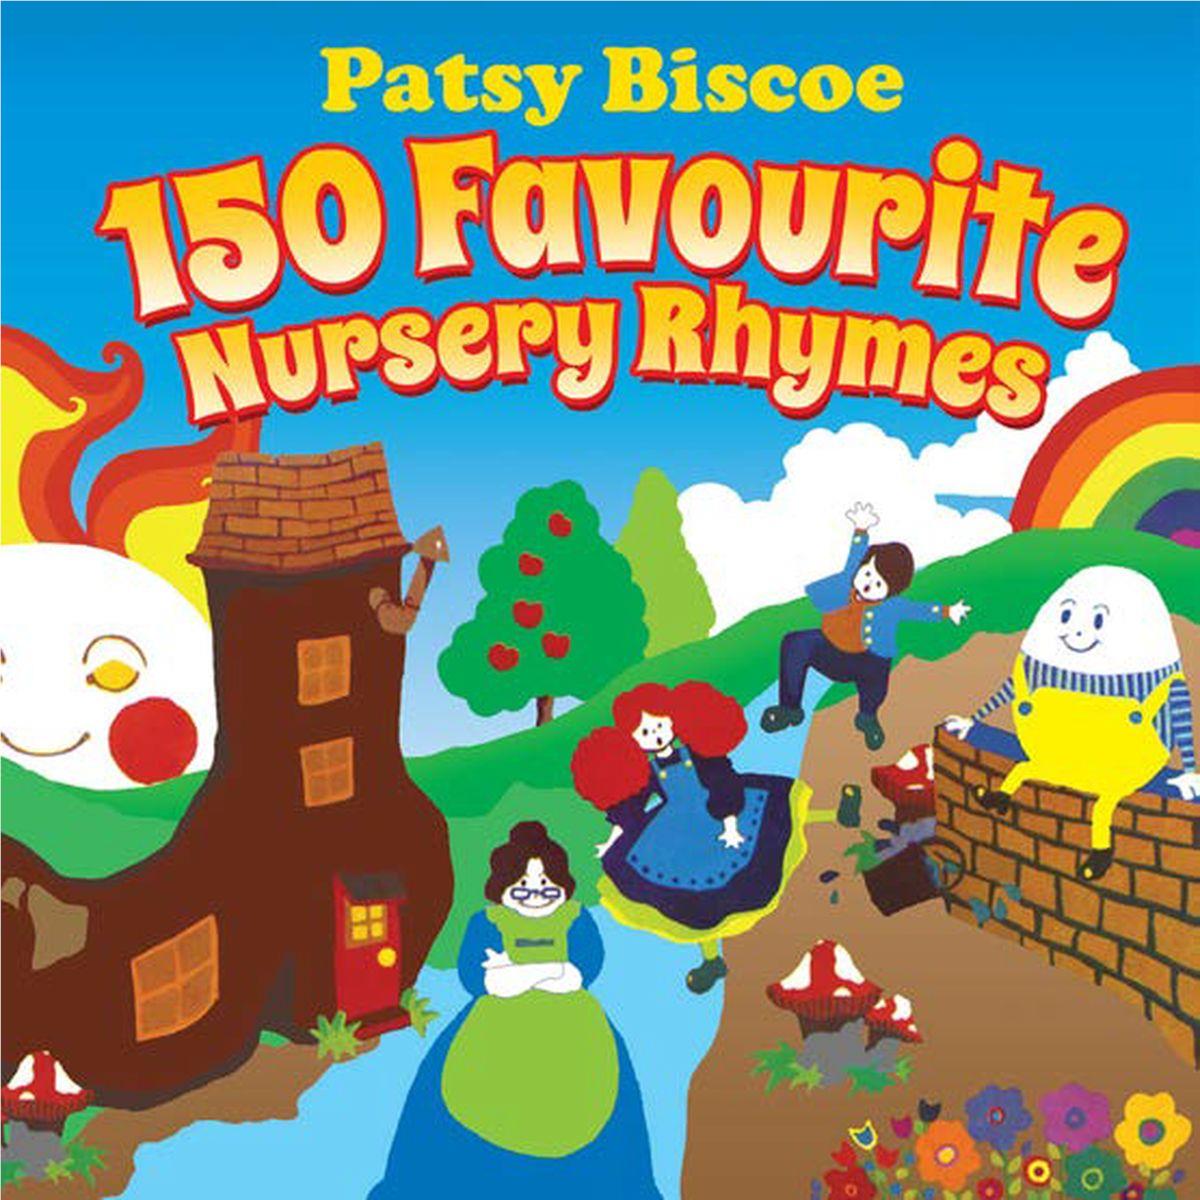 150 favourite nursery rhymes